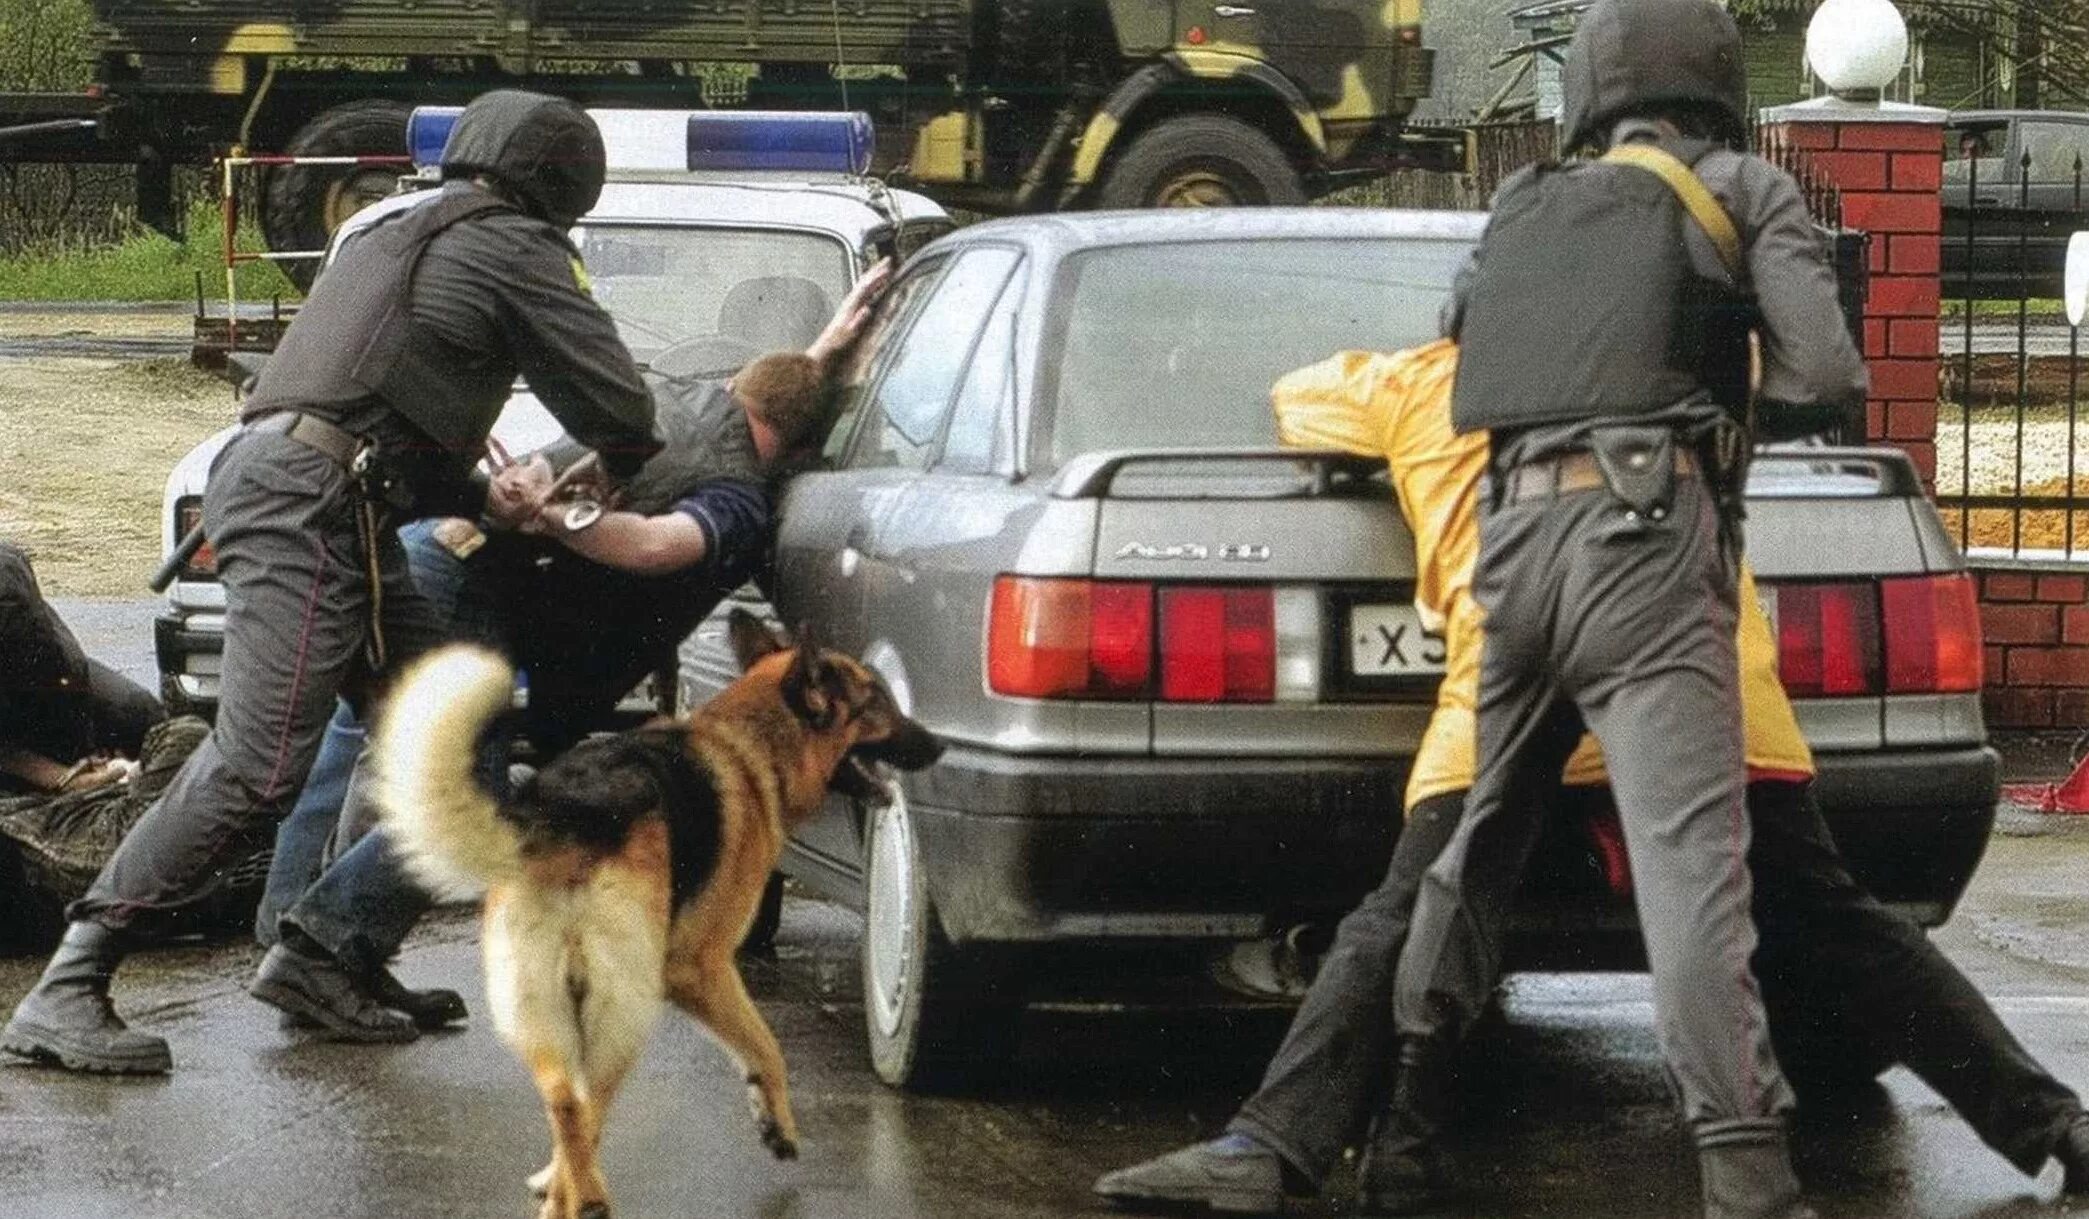 В погоне за преступником. Полиция и преступники. Собаки в полиции. Милиция с собакой. Полицейский с собакой ловят преступника.